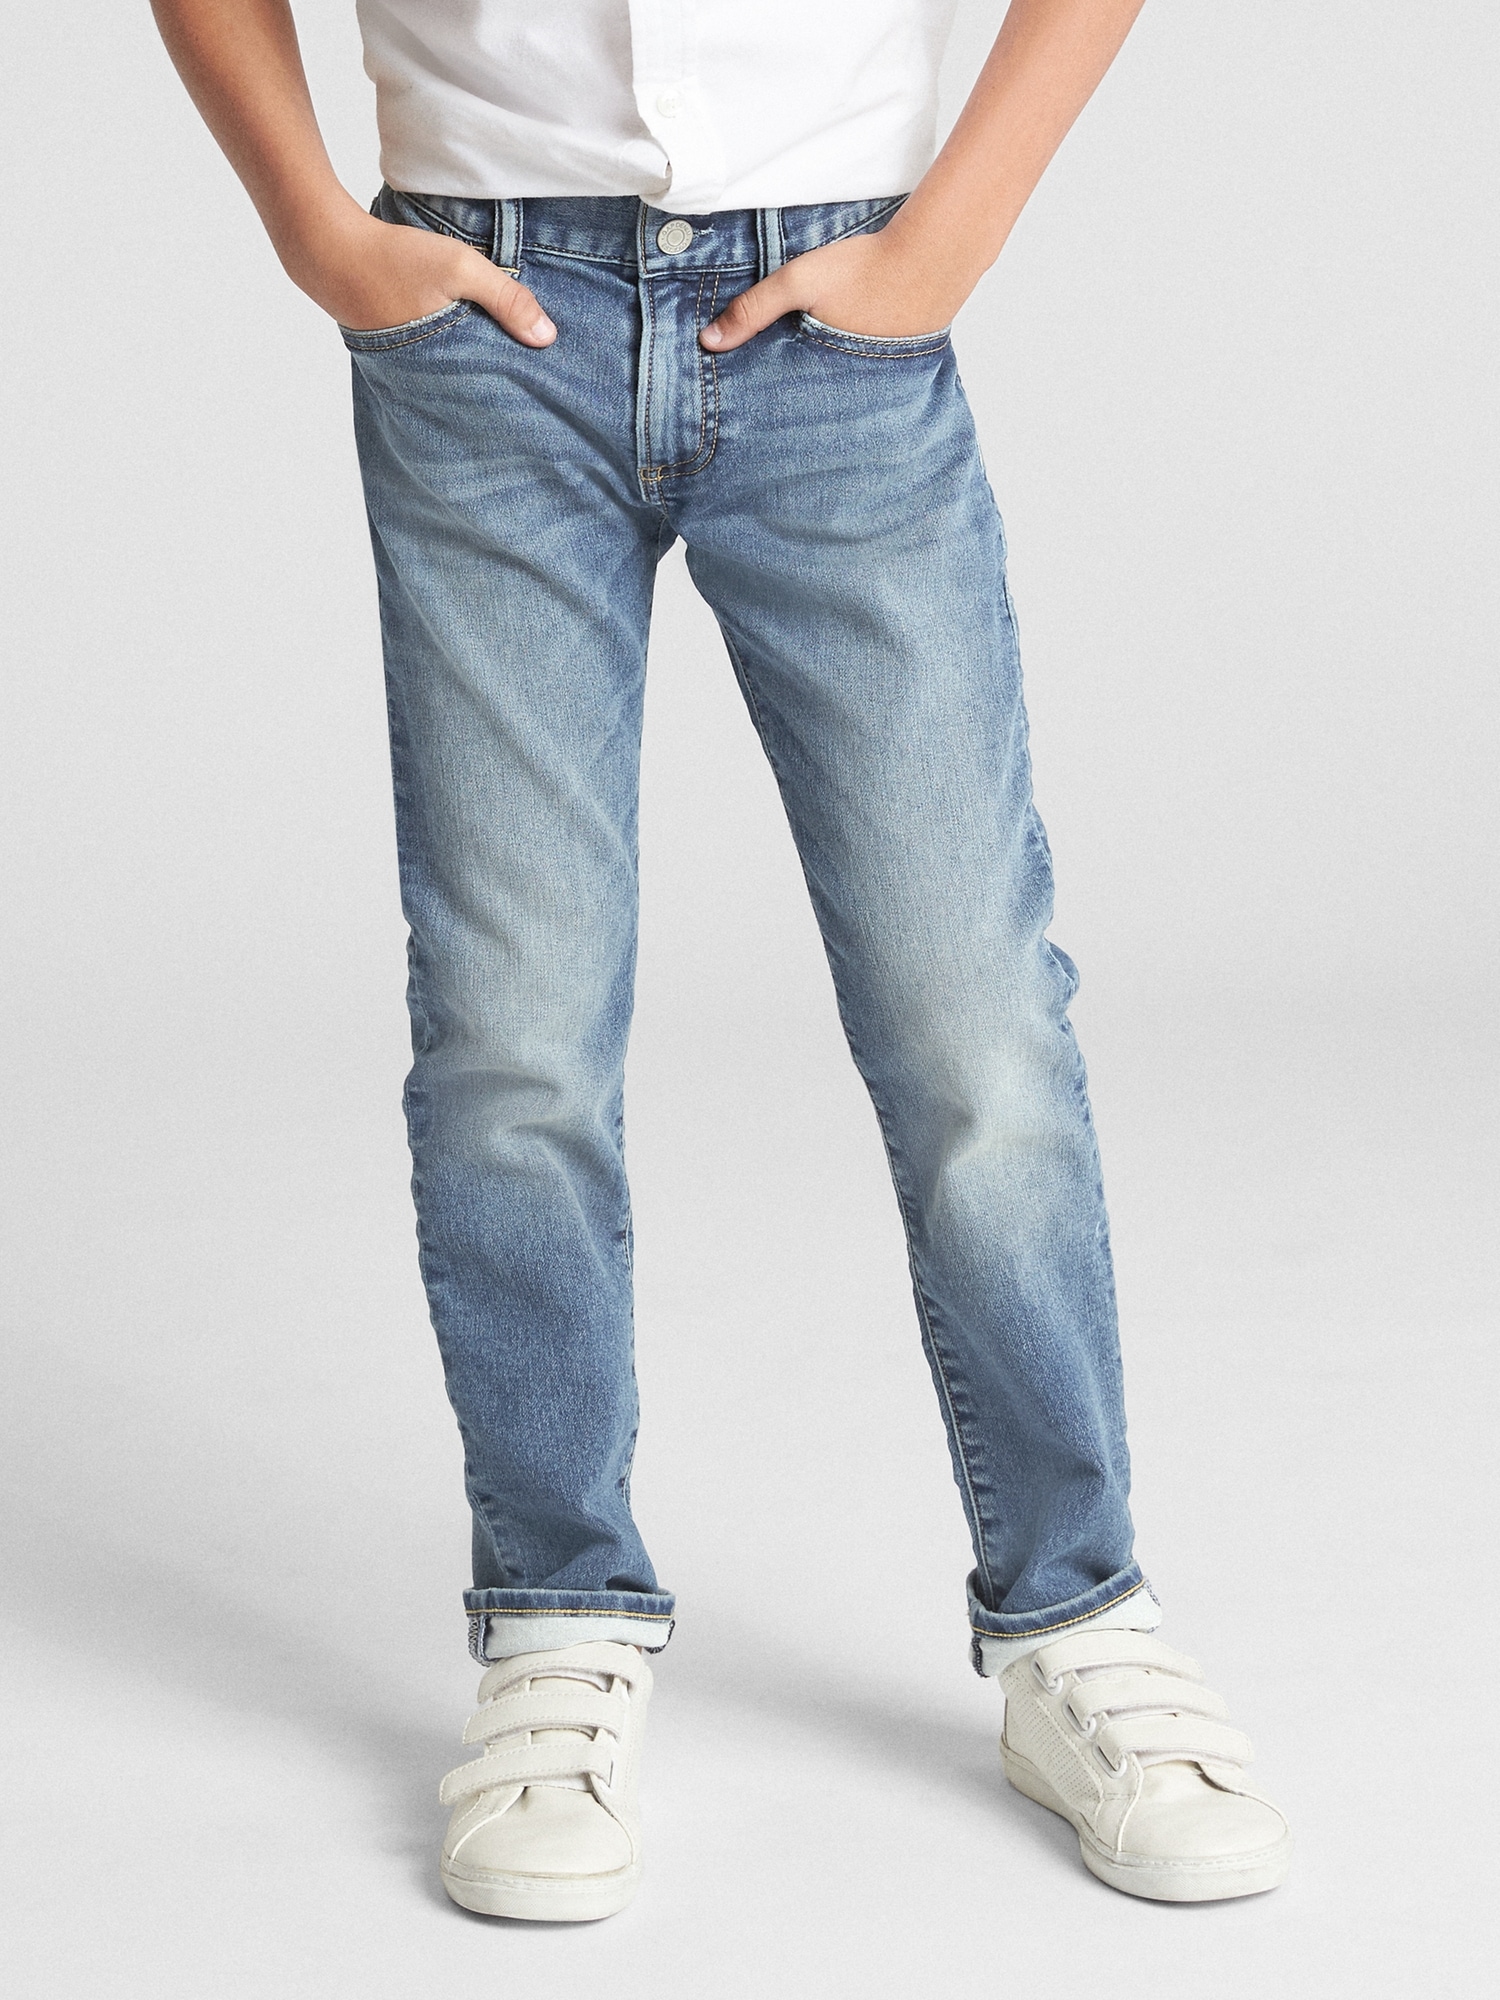 size 5 slim boy jeans